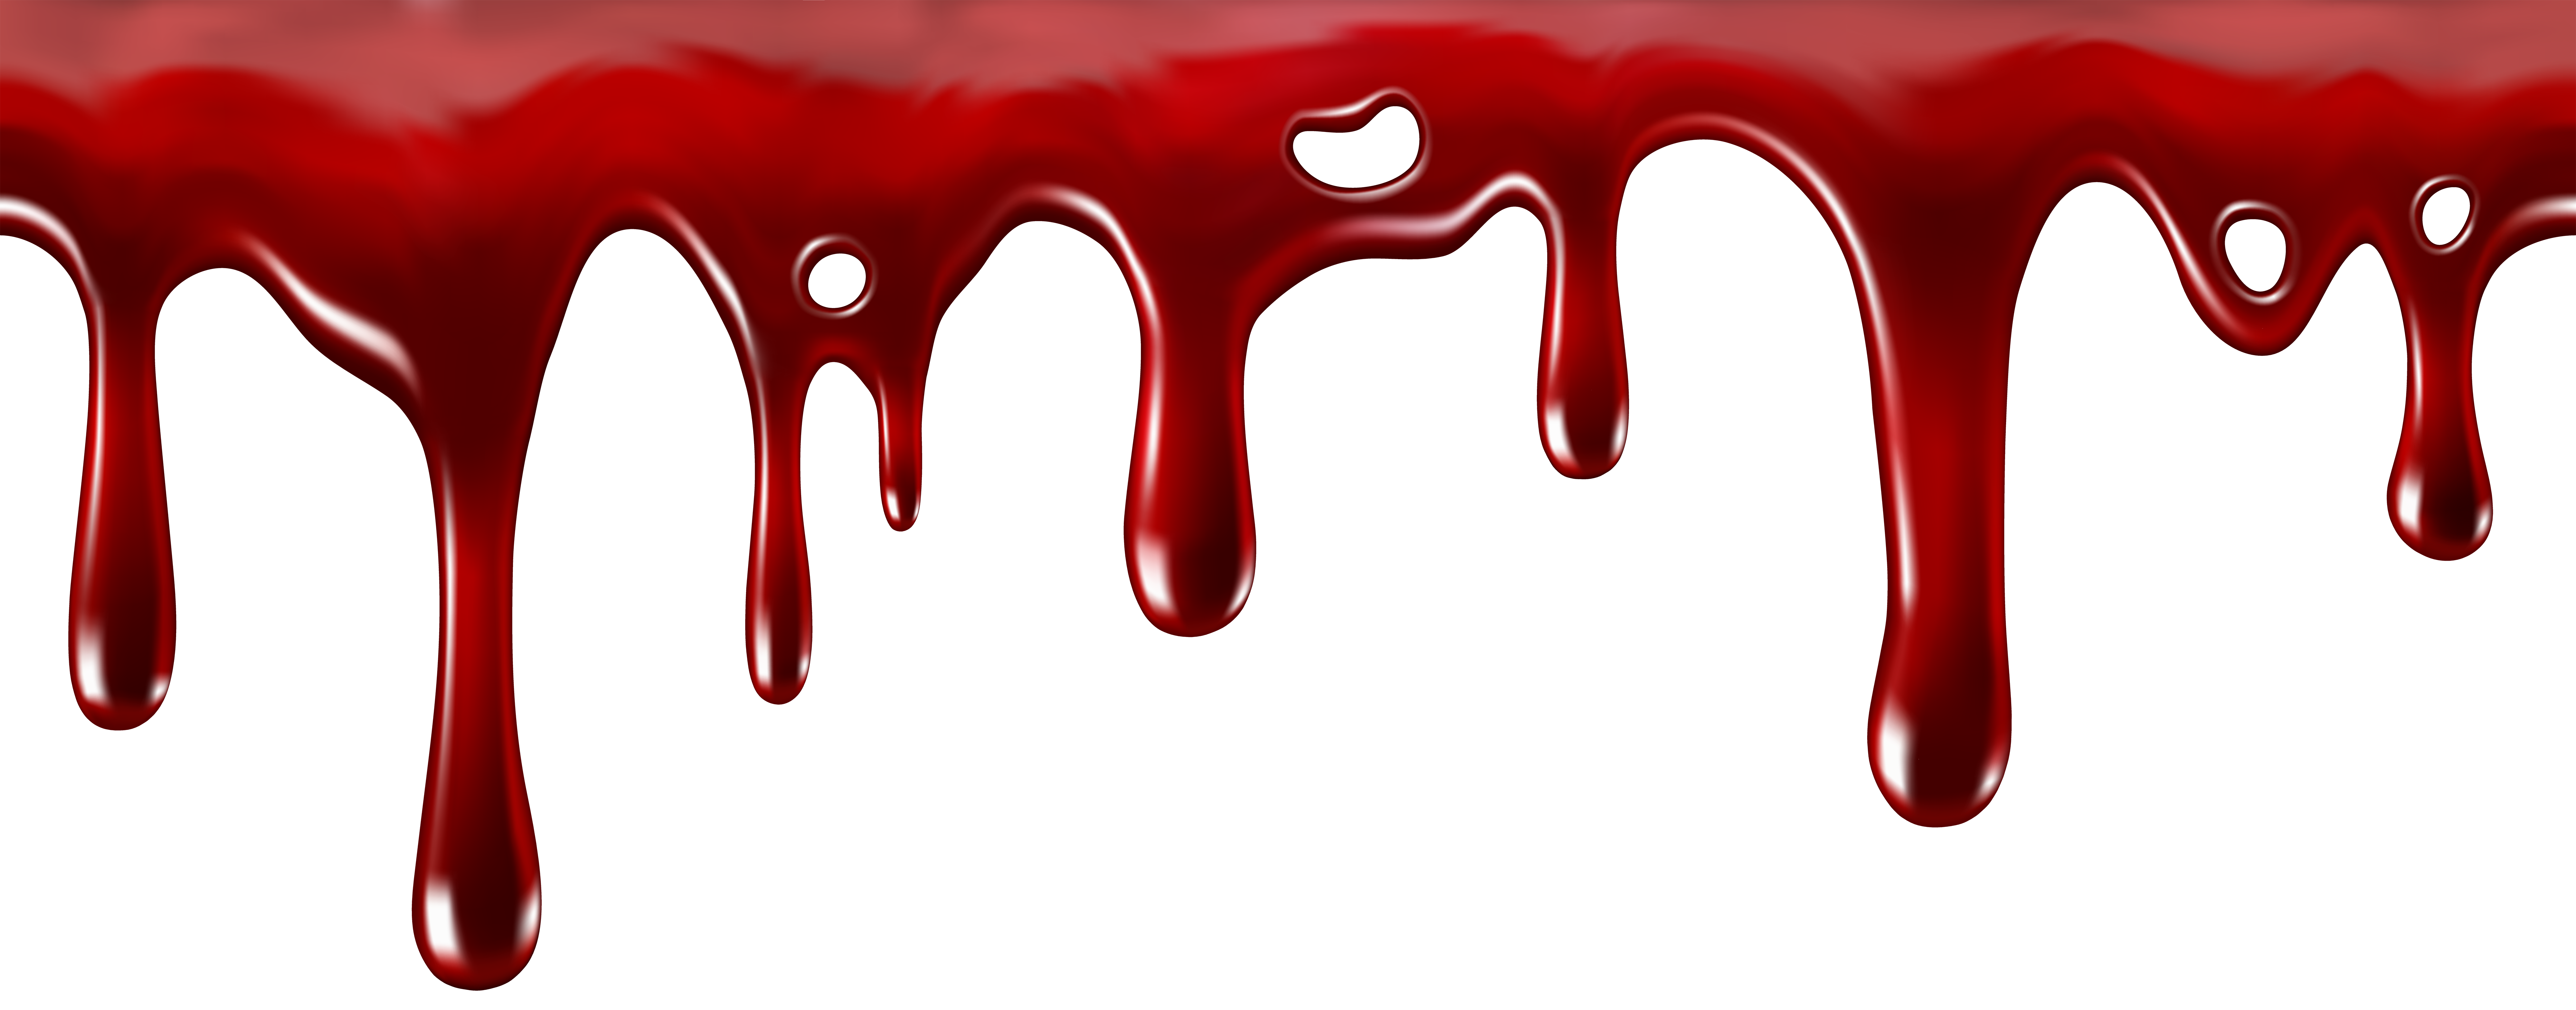 Dripping Blood Decor Transparent PNG Clip Art Image